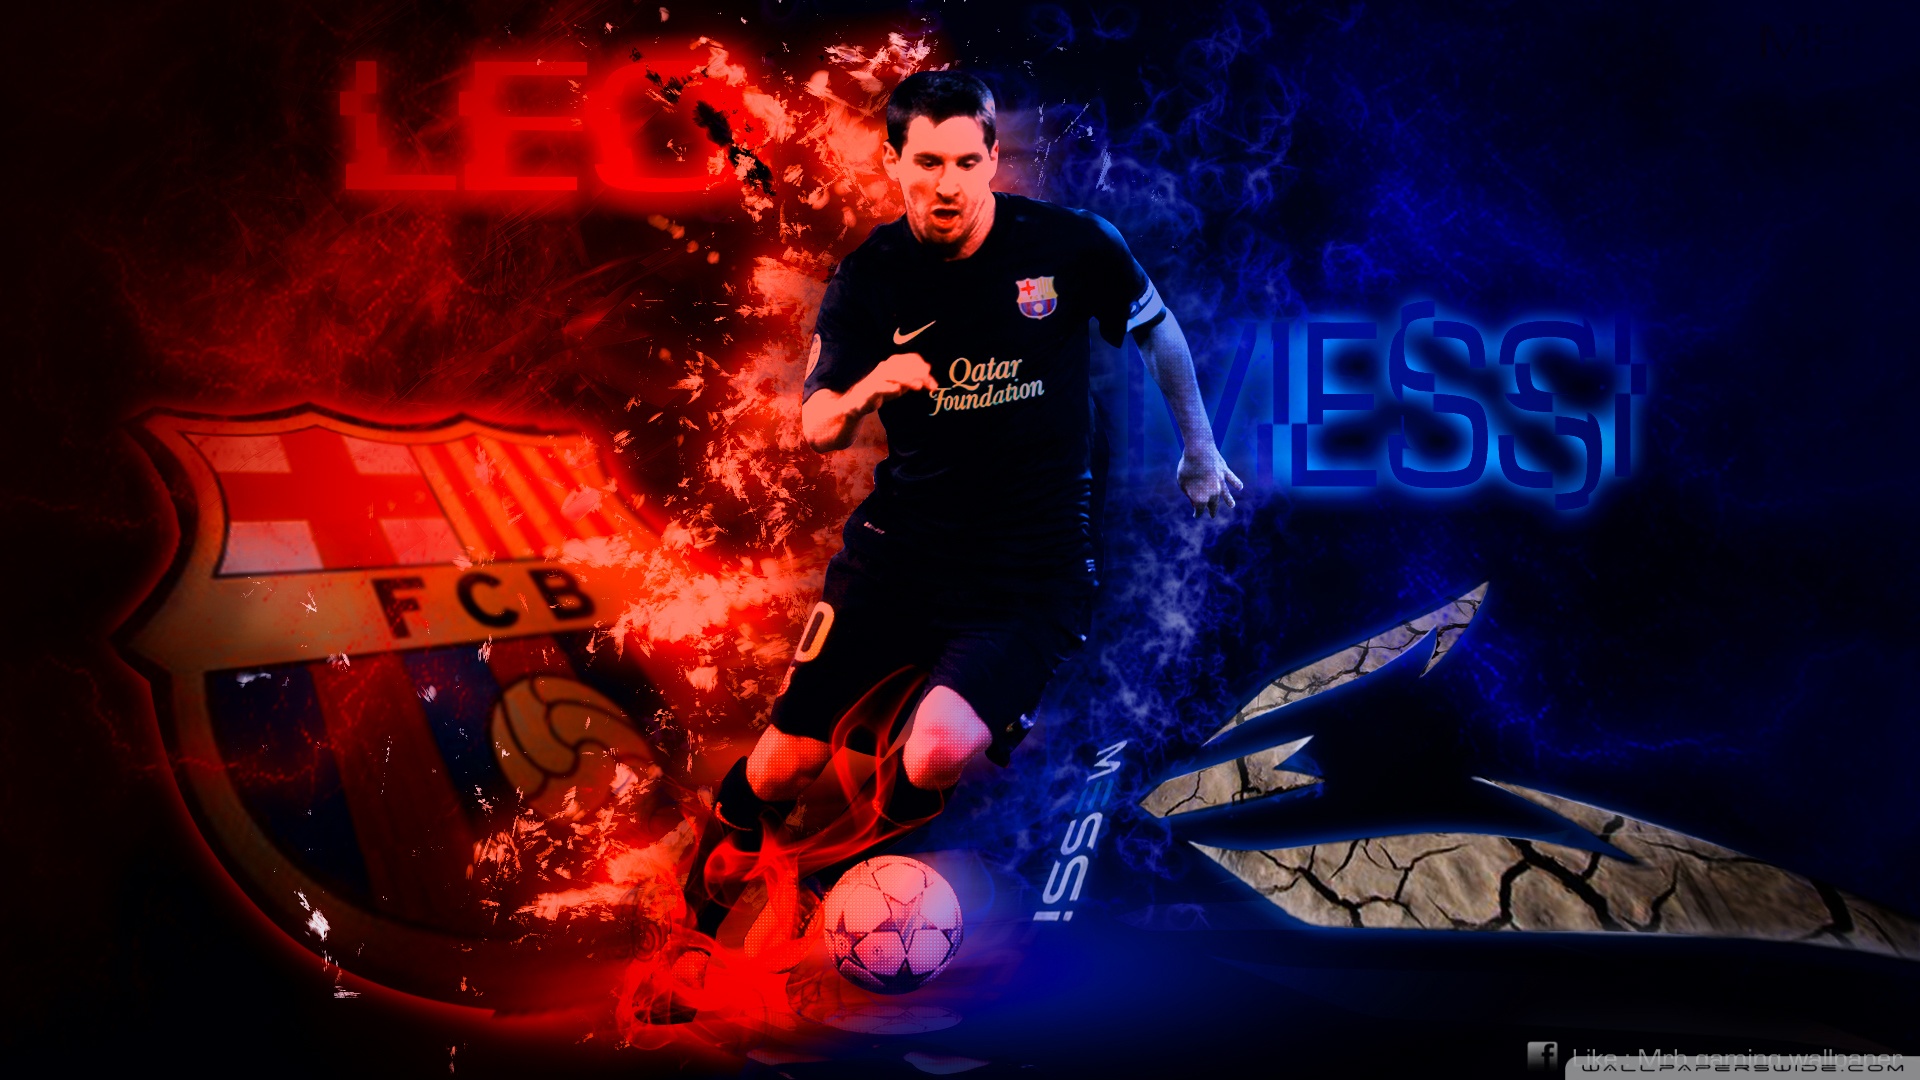  Messi Barcelona Wallpaper DESKTOP BACKGROUNDS Best Wallpapers HQ